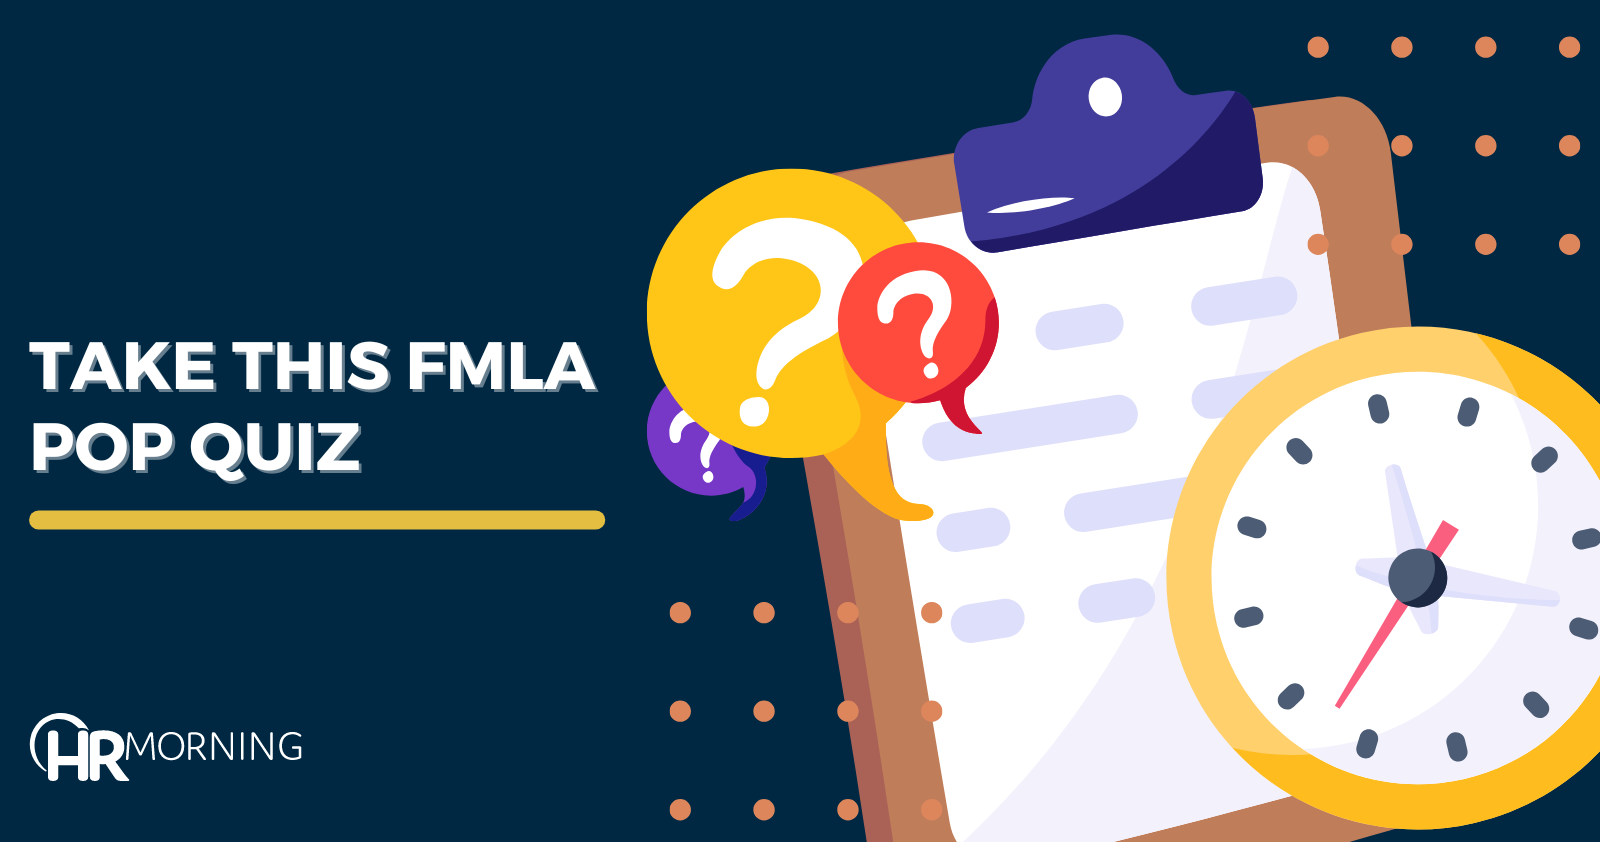 Take this FMLA pop quiz